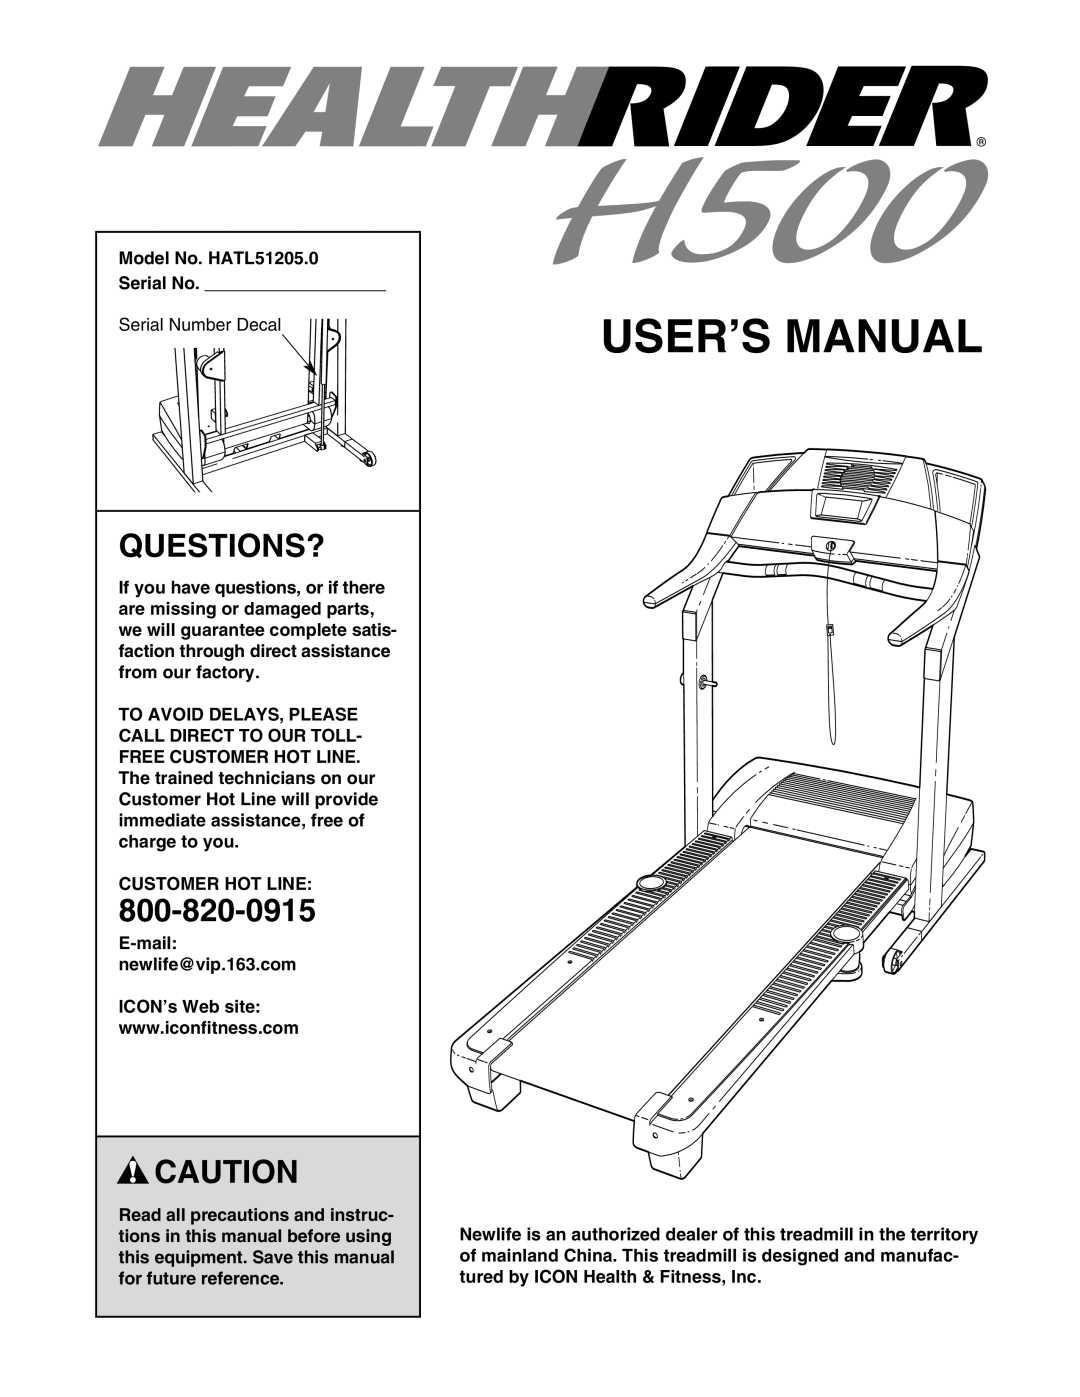 Healthrider manual Questions?, Model No. HATL51205.0 Serial No, Customer HOT Line 